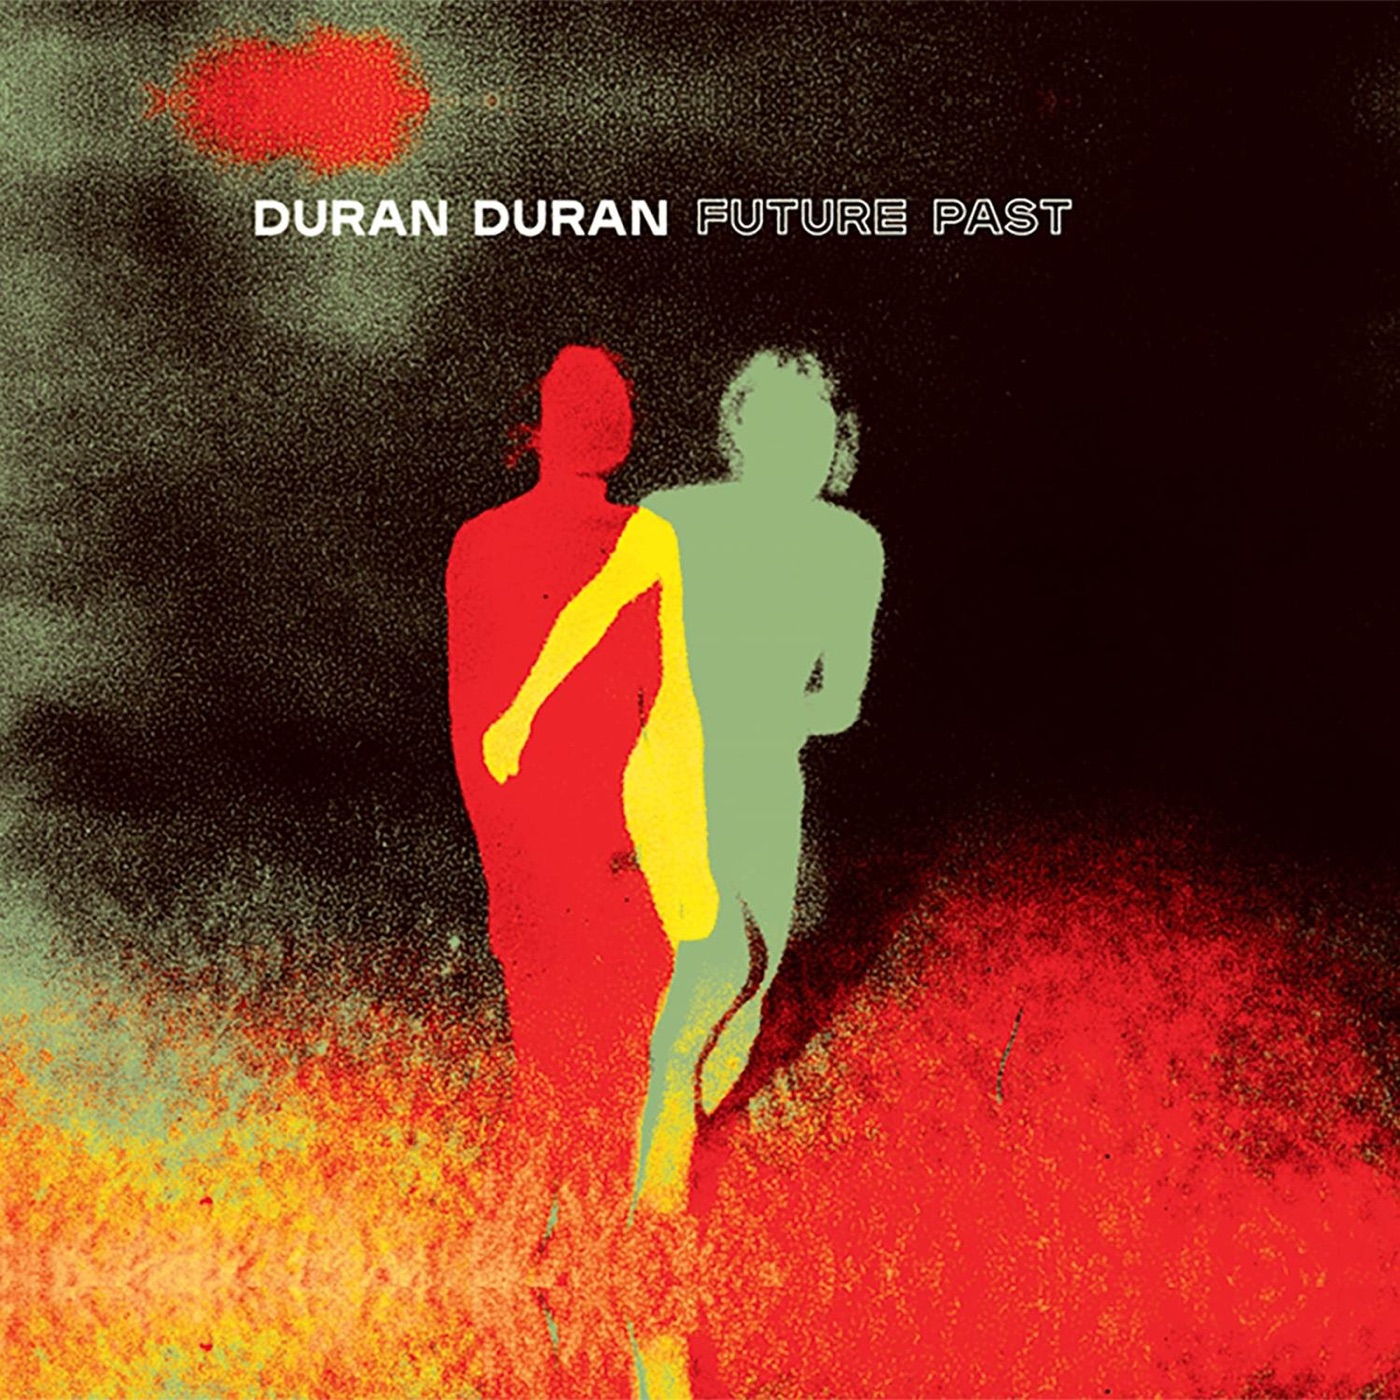 FUTURE PAST by Duran Duran